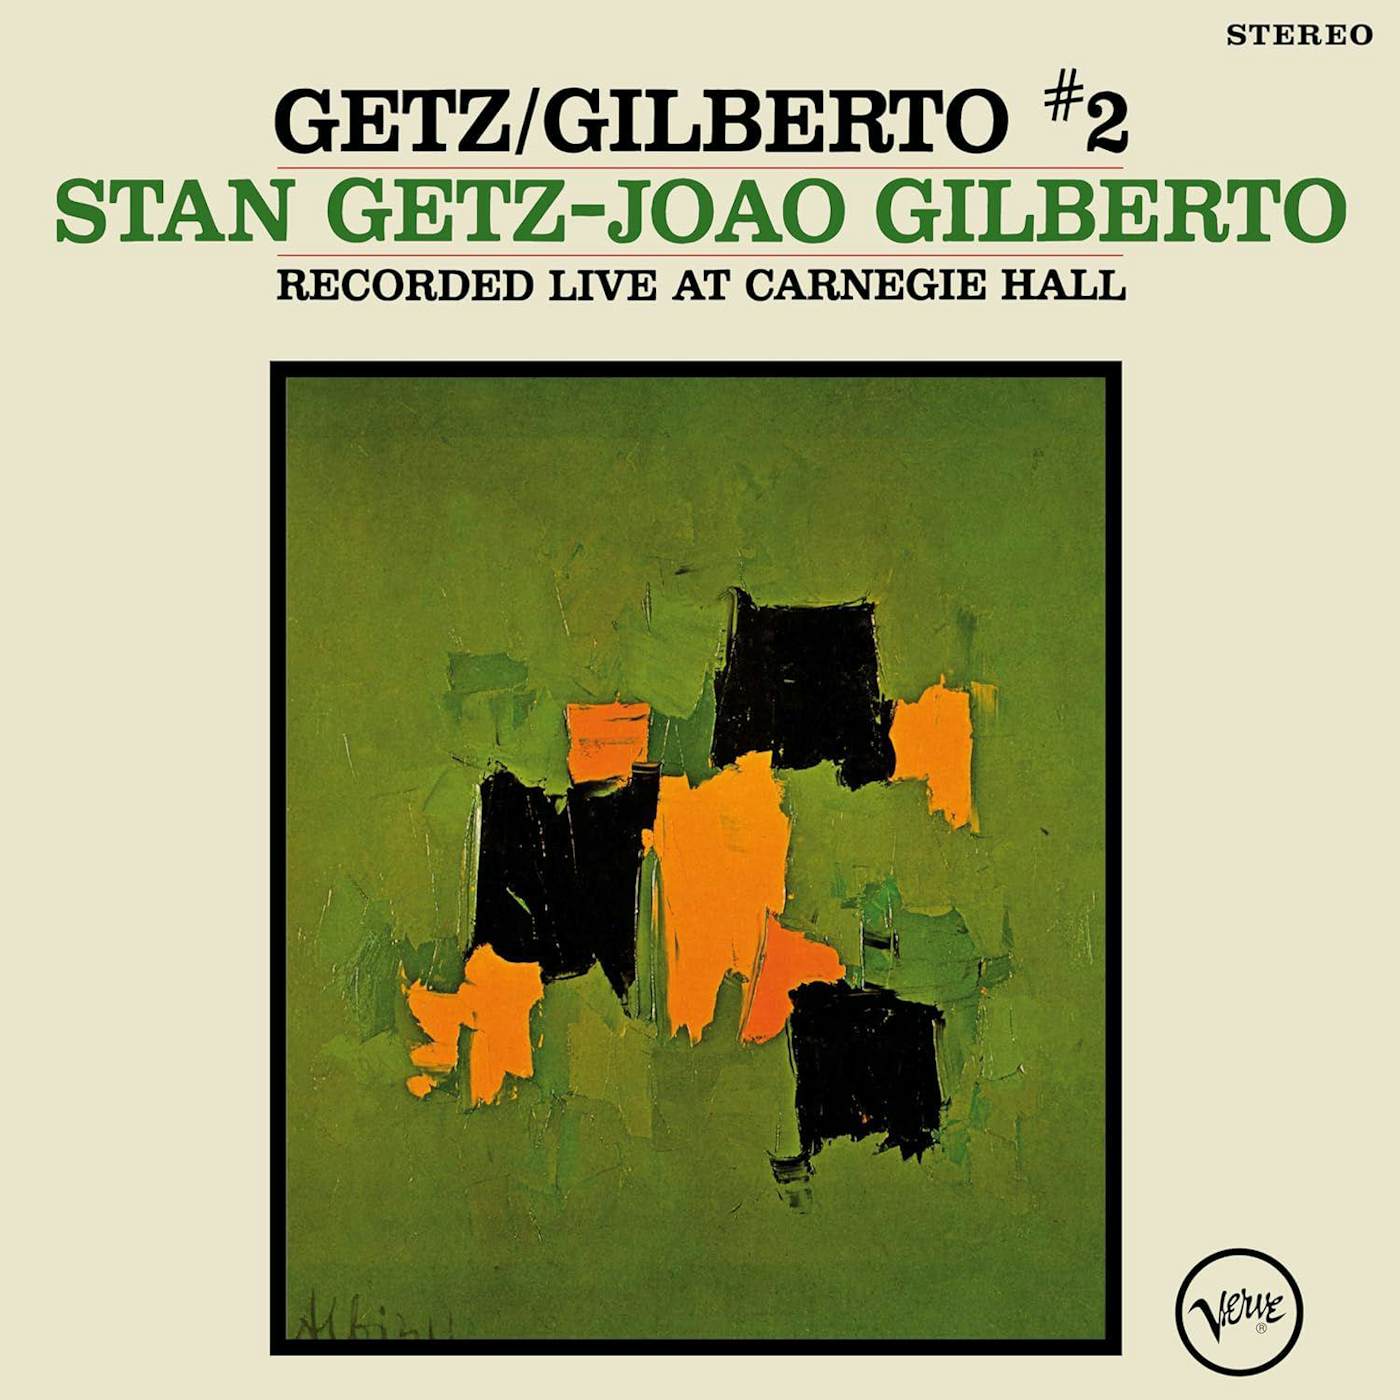 Stan Getz & Joao Gilberto Getz / Gilberto #2 Vinyl Record